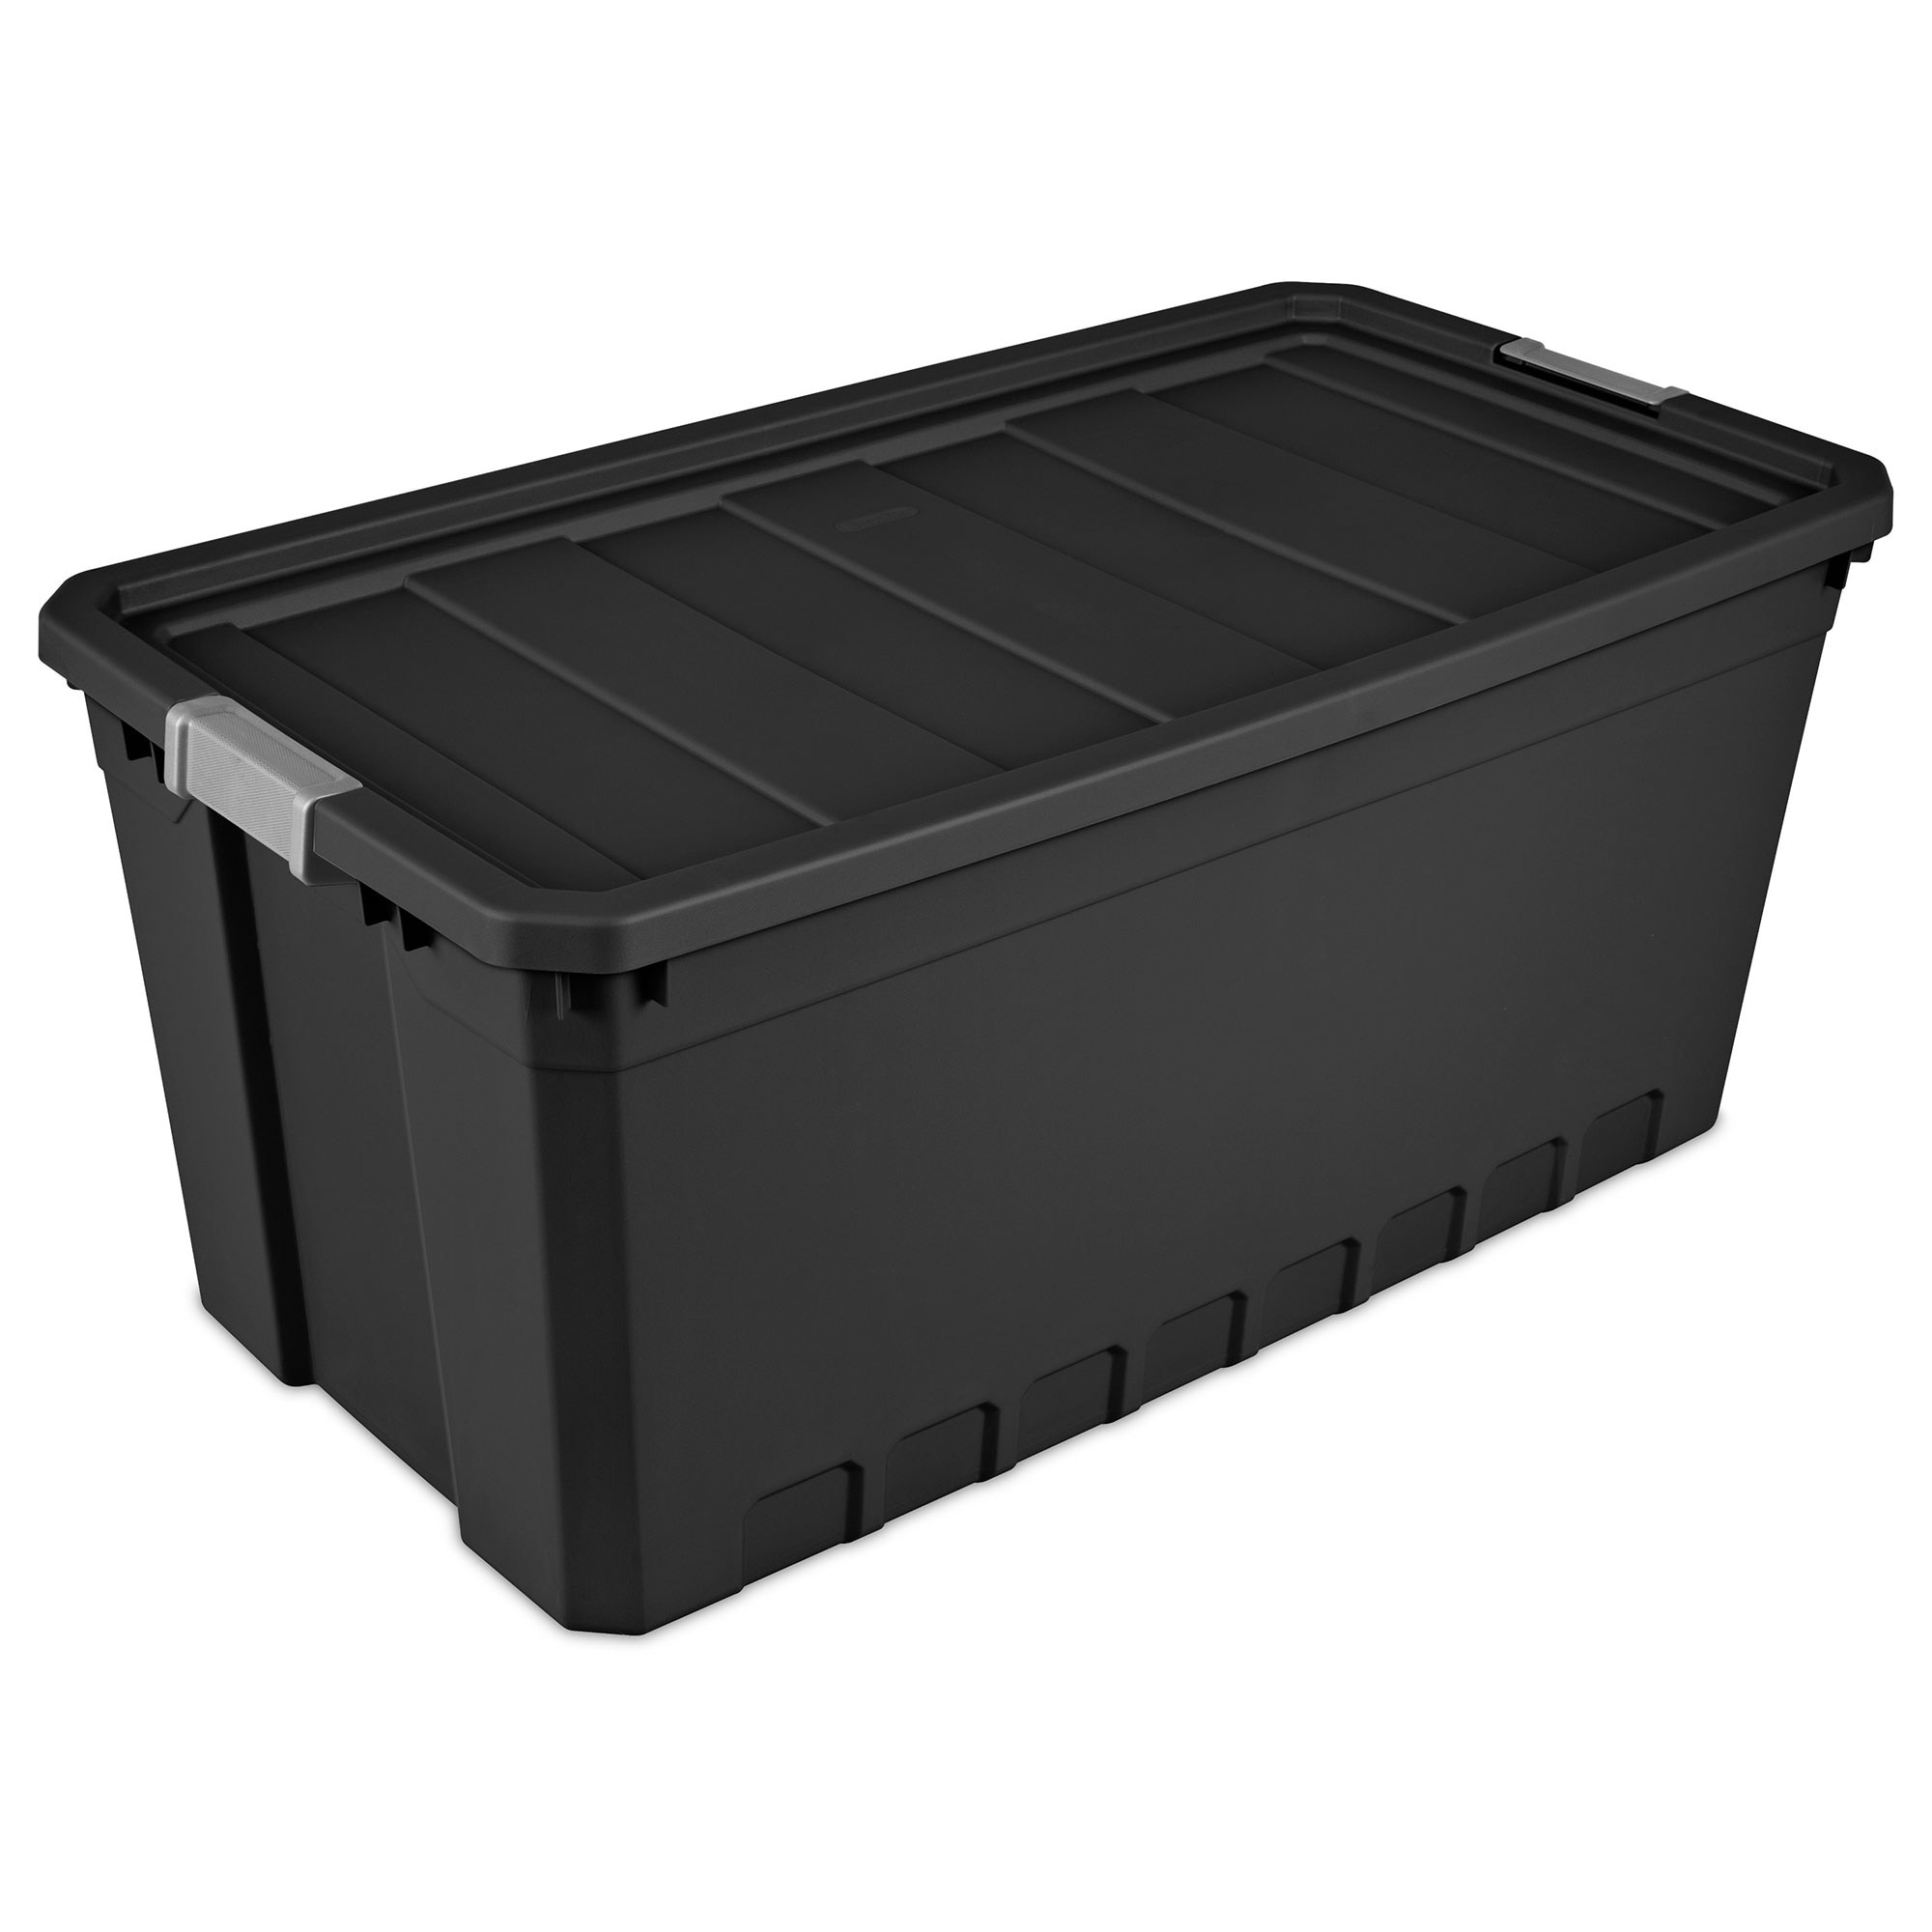  Sterilite Plastic Waterproof Storage Box With Lids